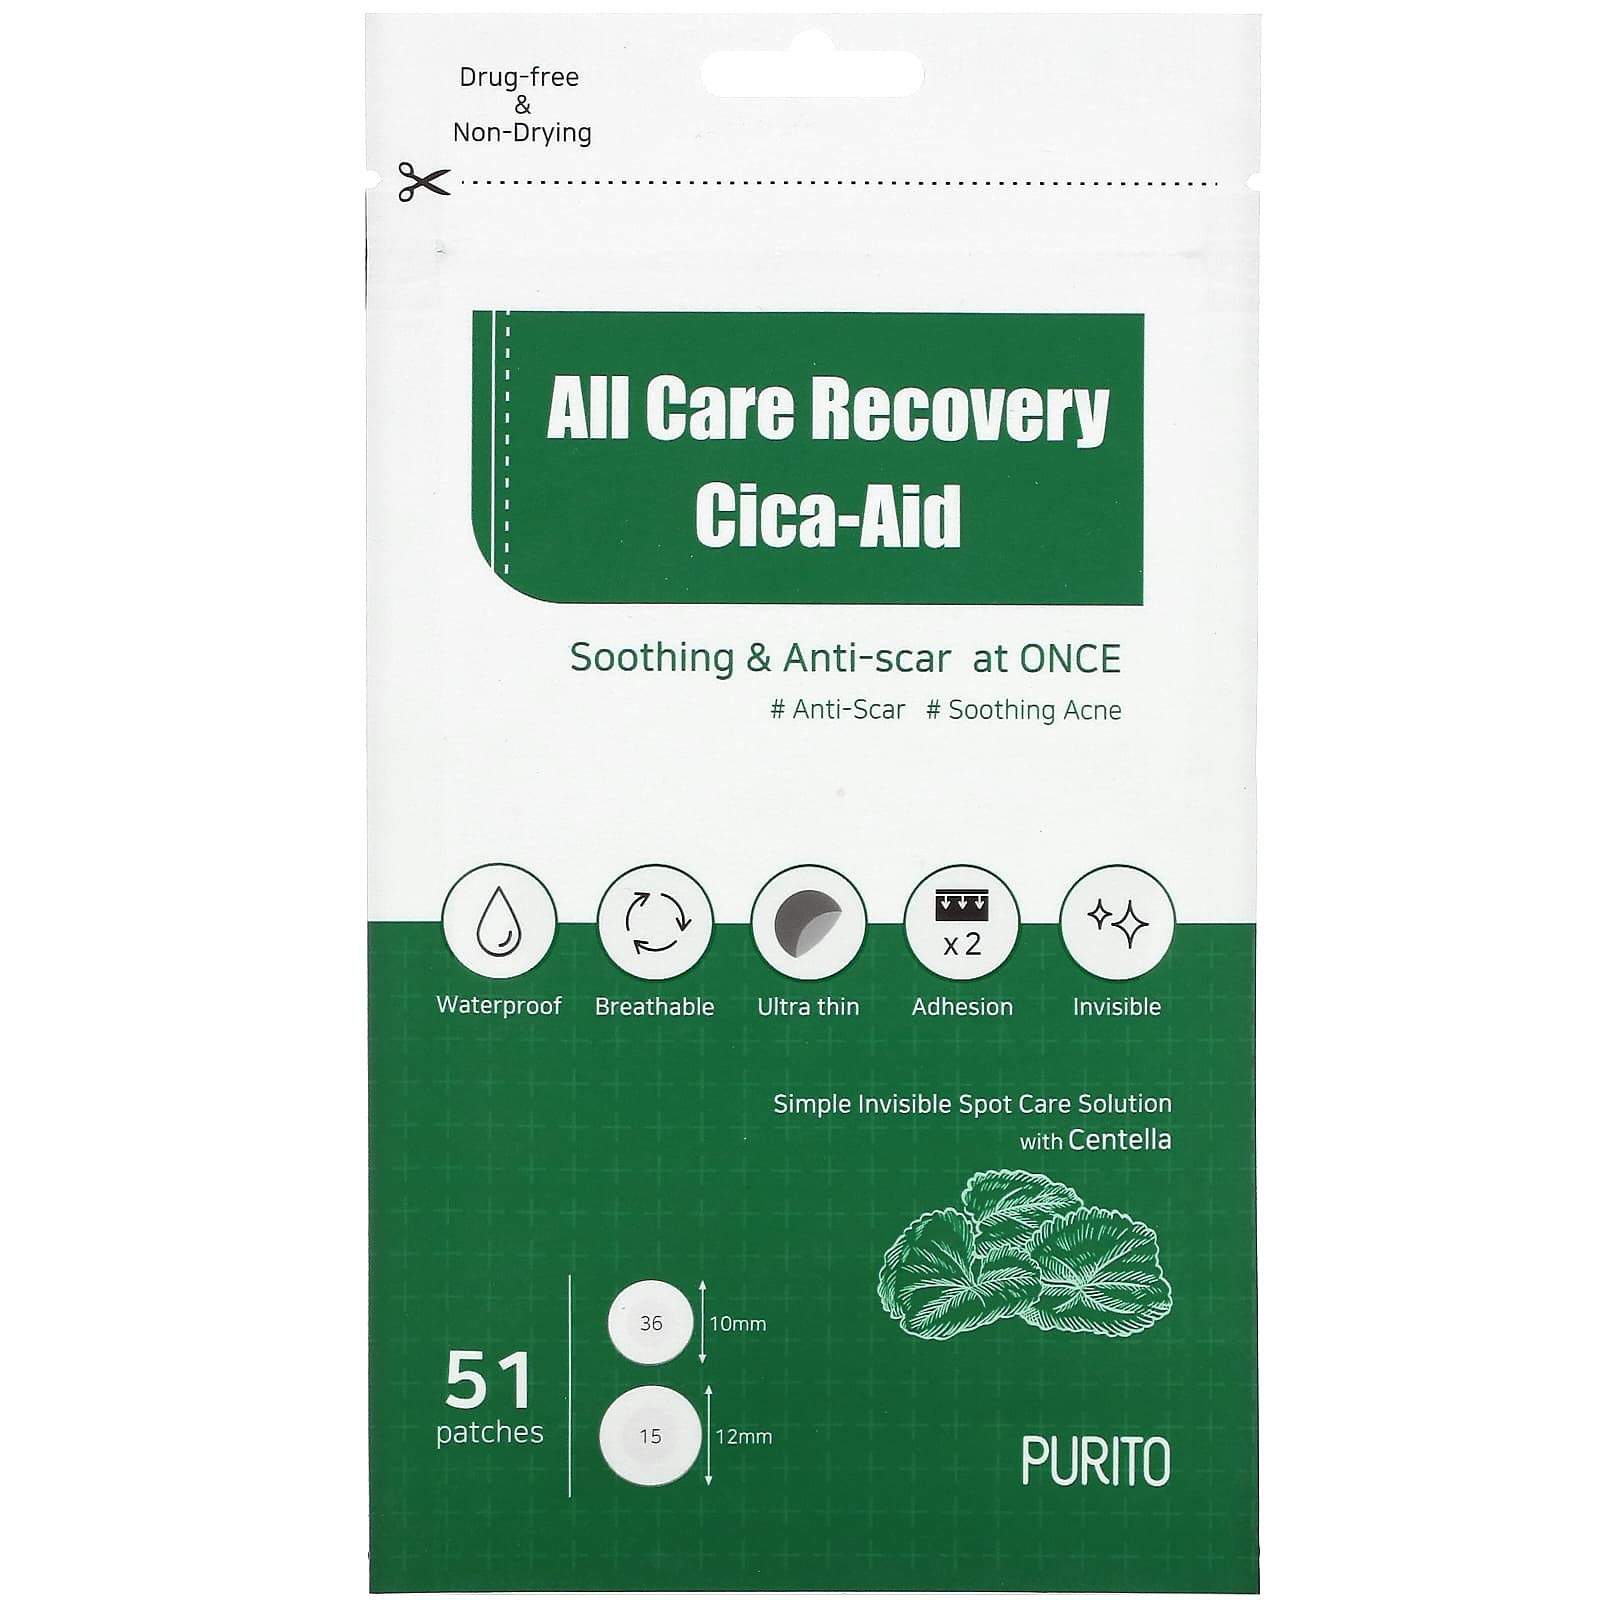 Purito, All Care Recovery Cica-Aid